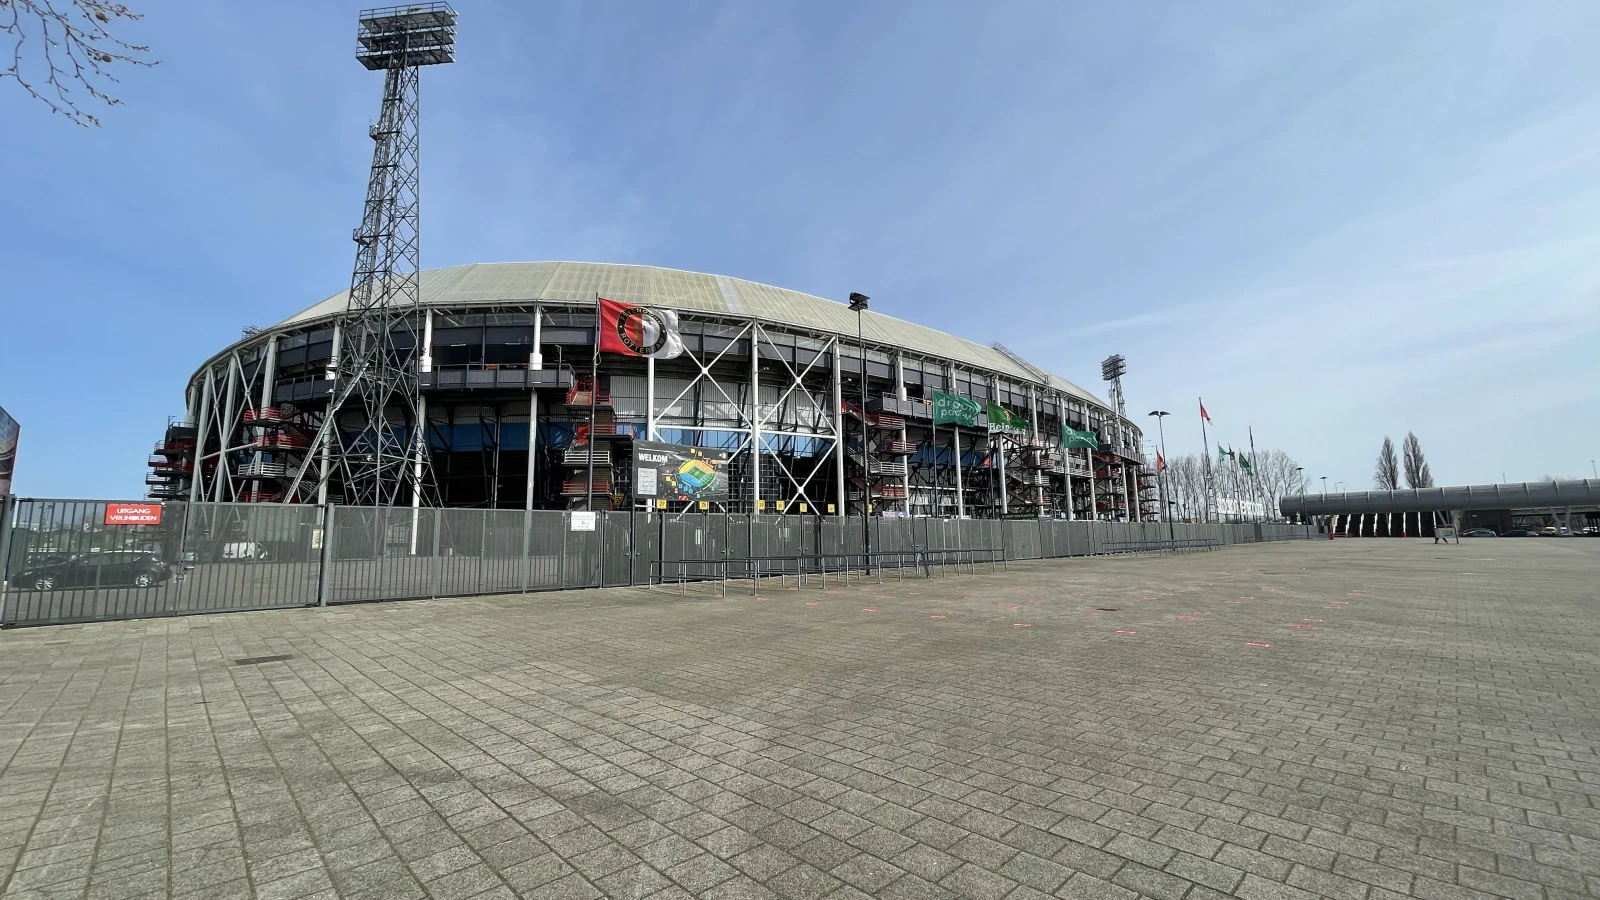 OFFICIEEL | Wedstrijd tussen Feyenoord en Heracles Almelo verplaatst